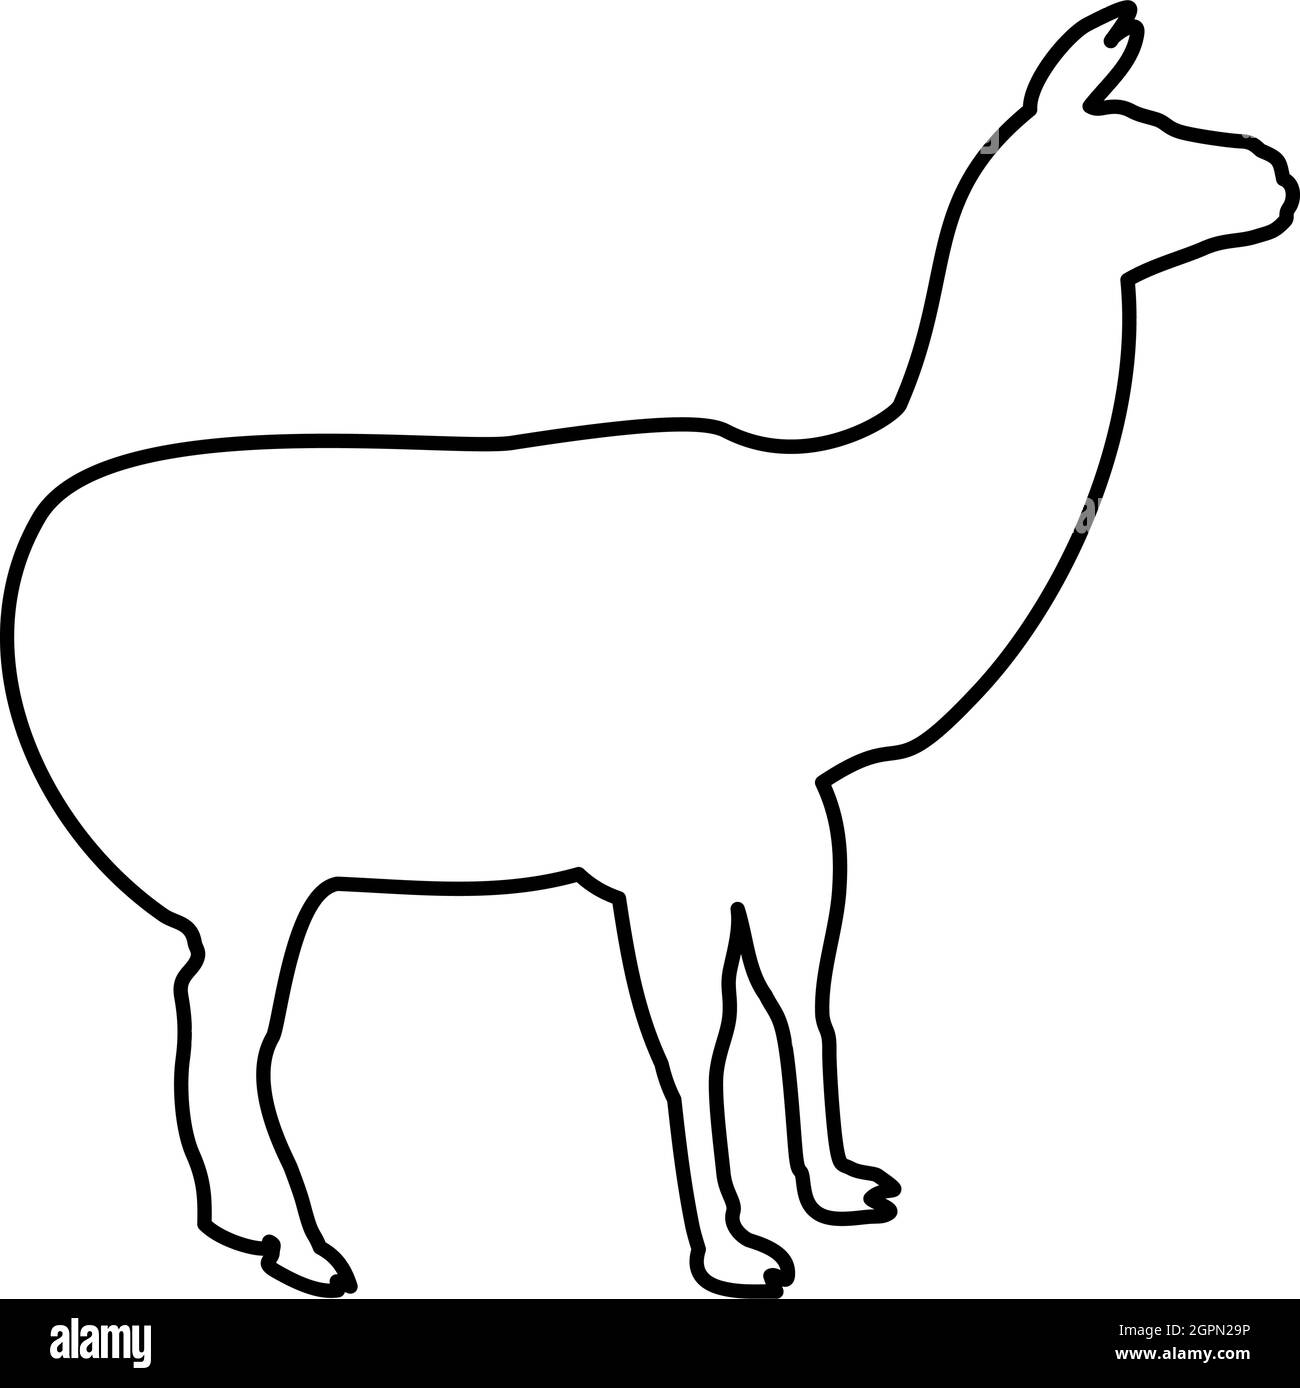 Alpaca Llama Lama Guanaco contour outline black color vector illustration flat style image Stock Vector